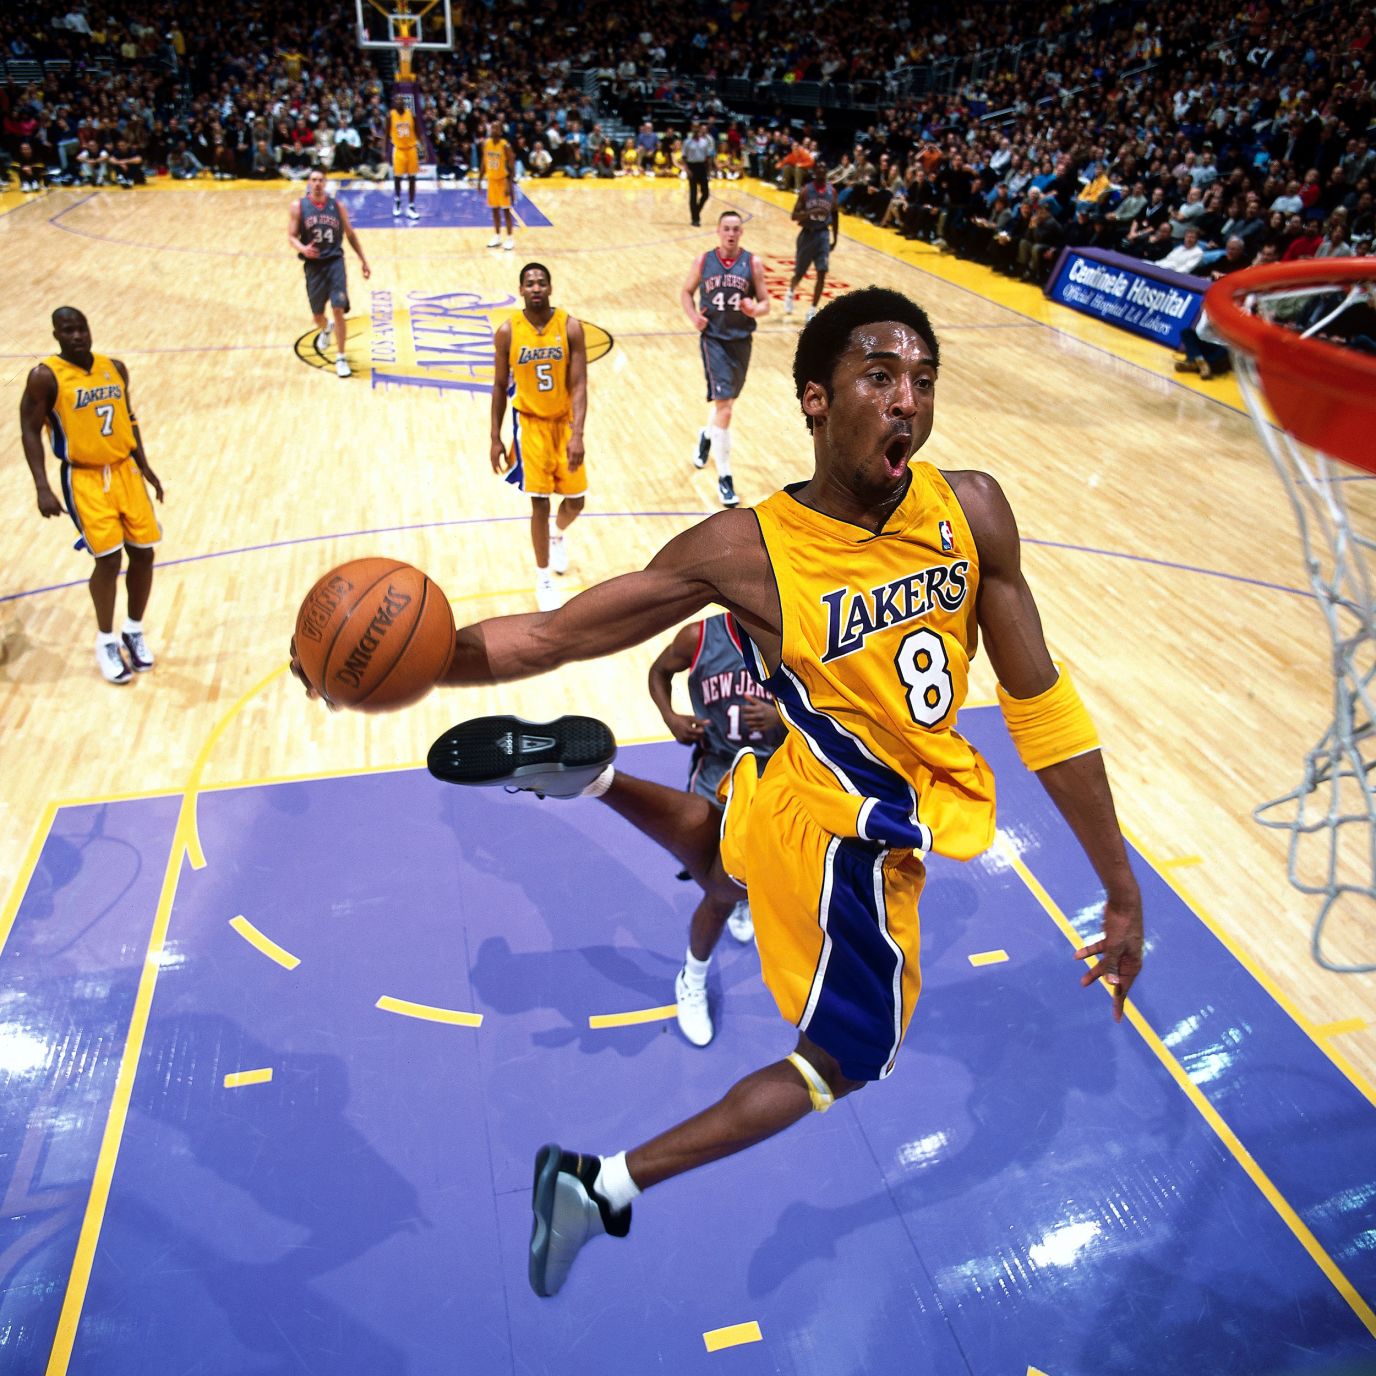 Kobe Bryant's life in pictures | CNN